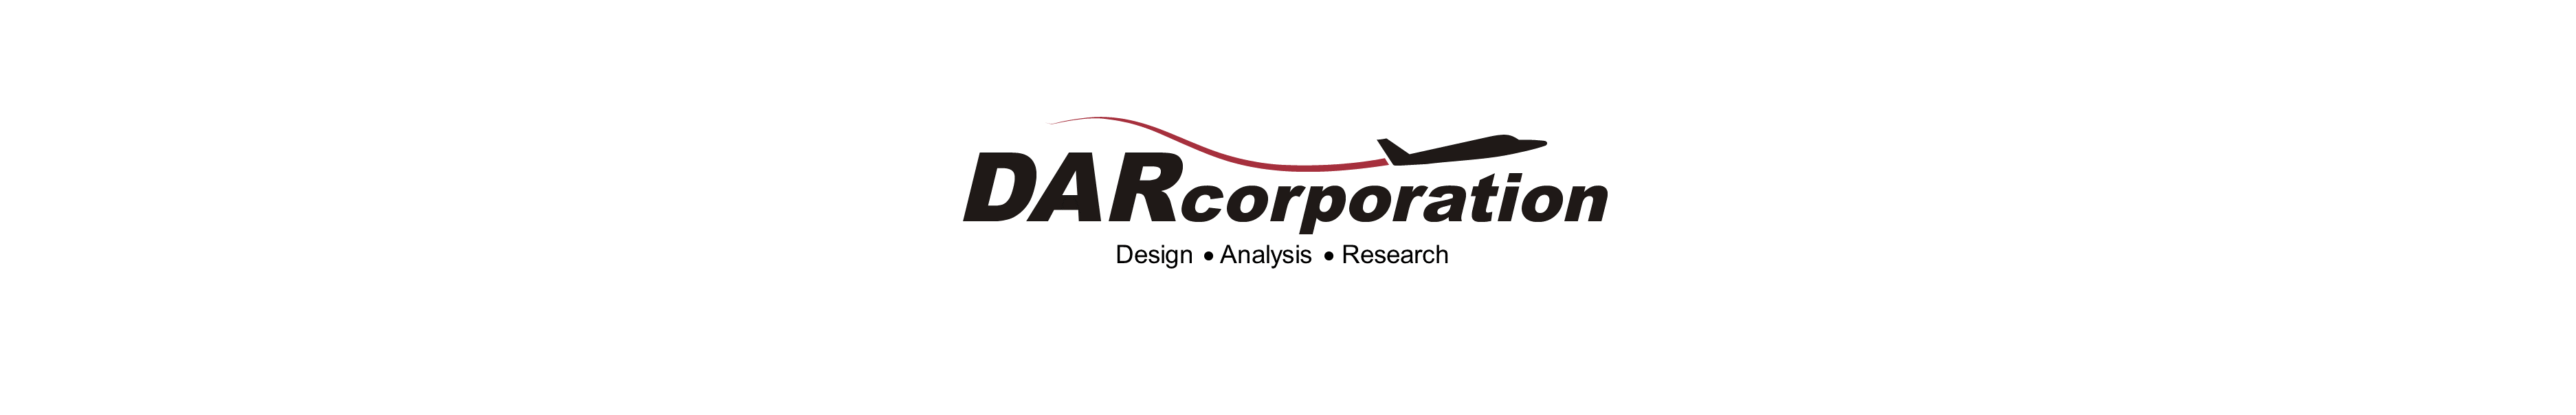 DARcorporation logo